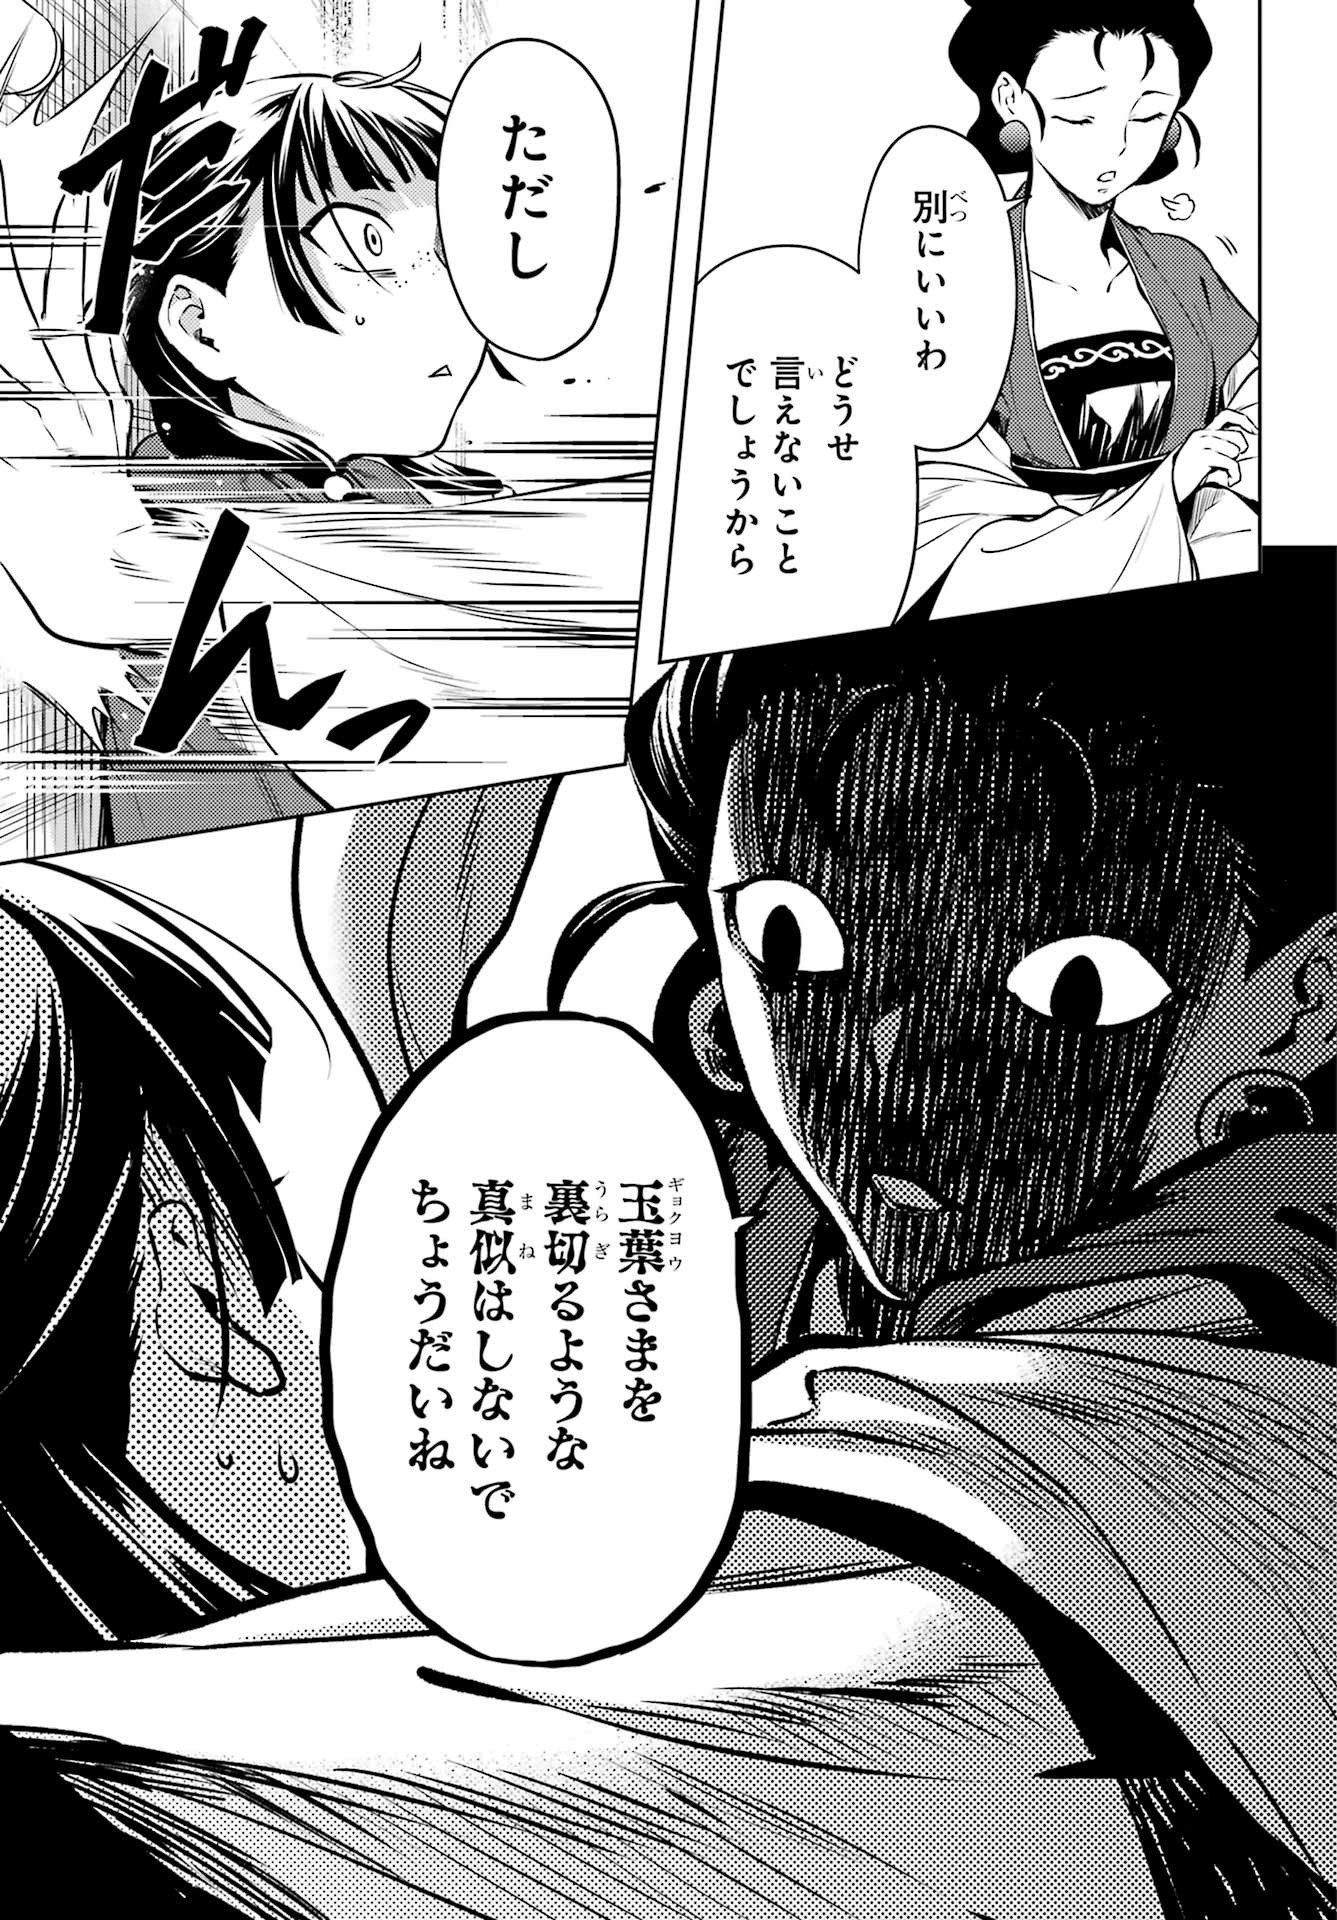 Kusuriya no Hitorigoto - Chapter 55-2 - Page 28